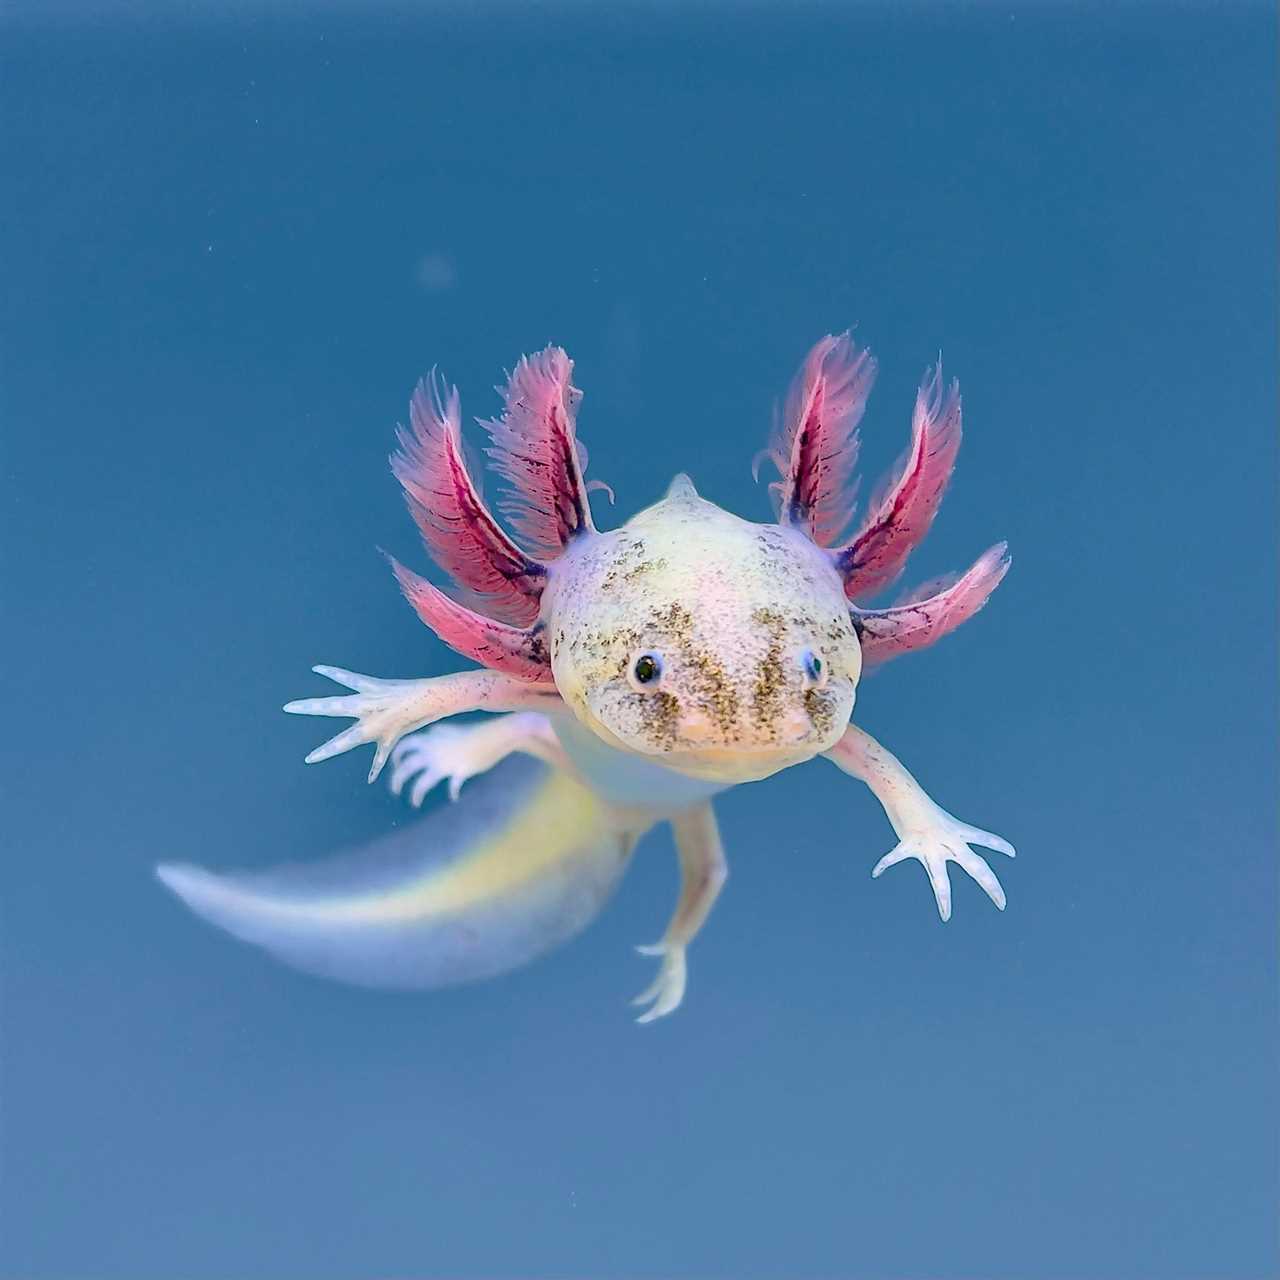 Leucistic axolotls